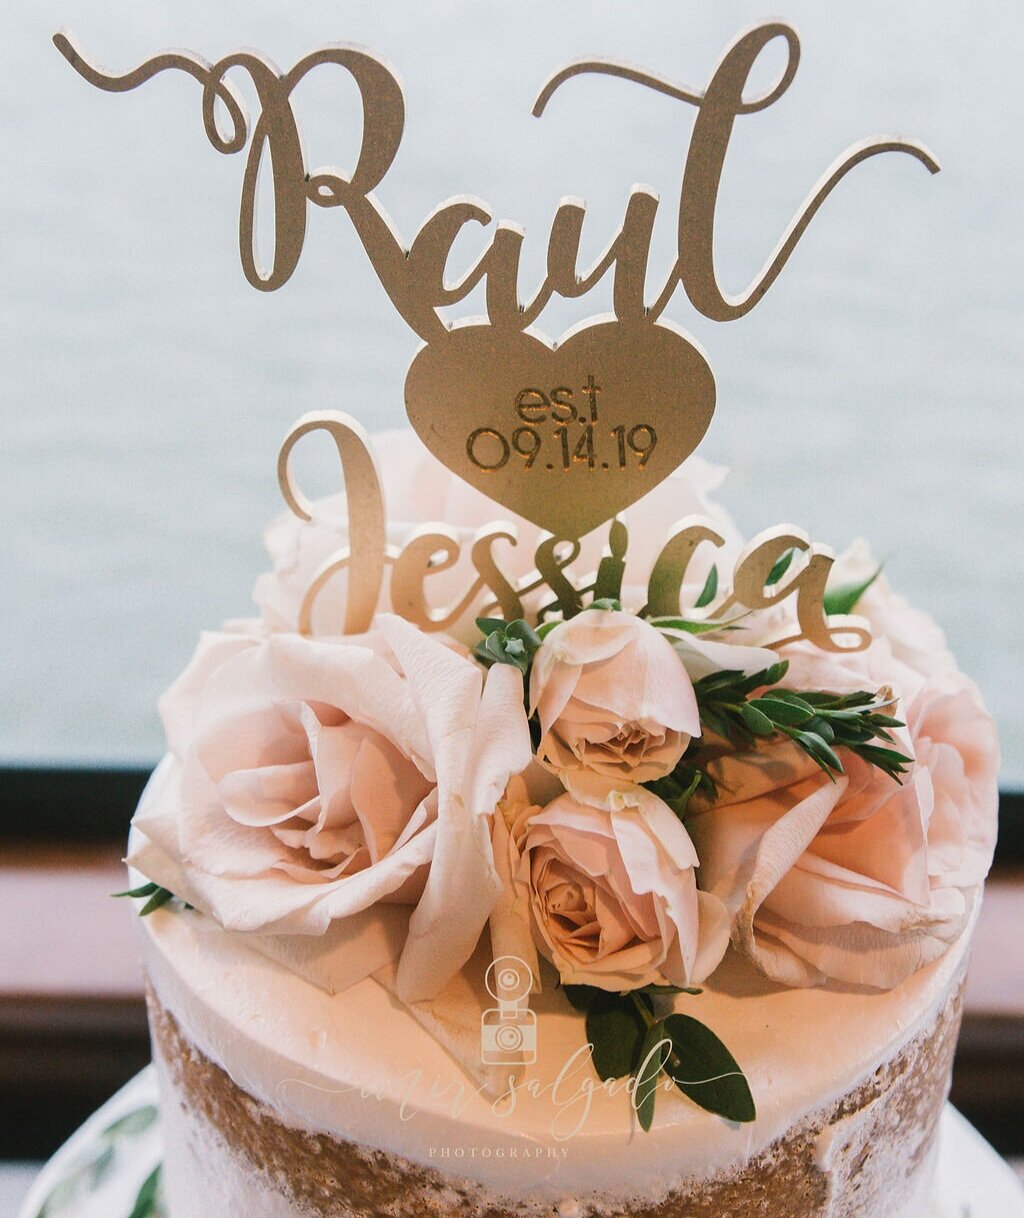 wedding-topper-ideas, wedding-cake-ideas, wedding-cake-colors, wedding-cake-flavors, wedding-cake-designs